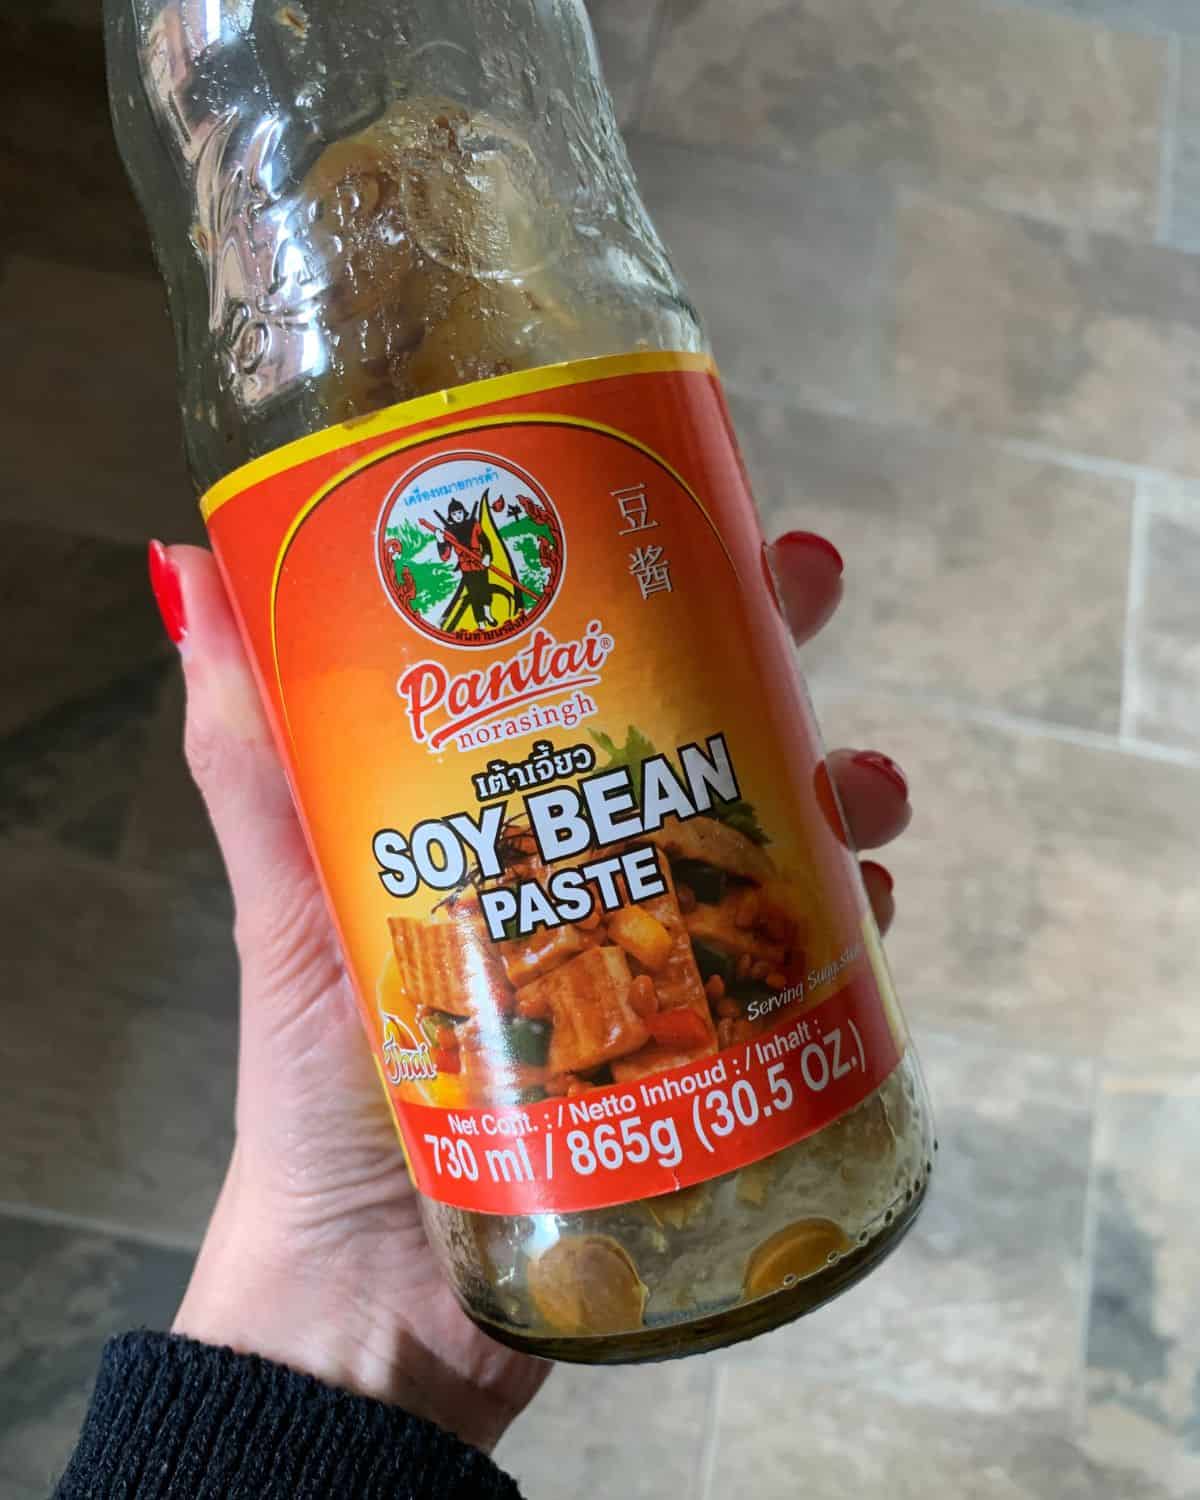 A bottle of soy bean paste.